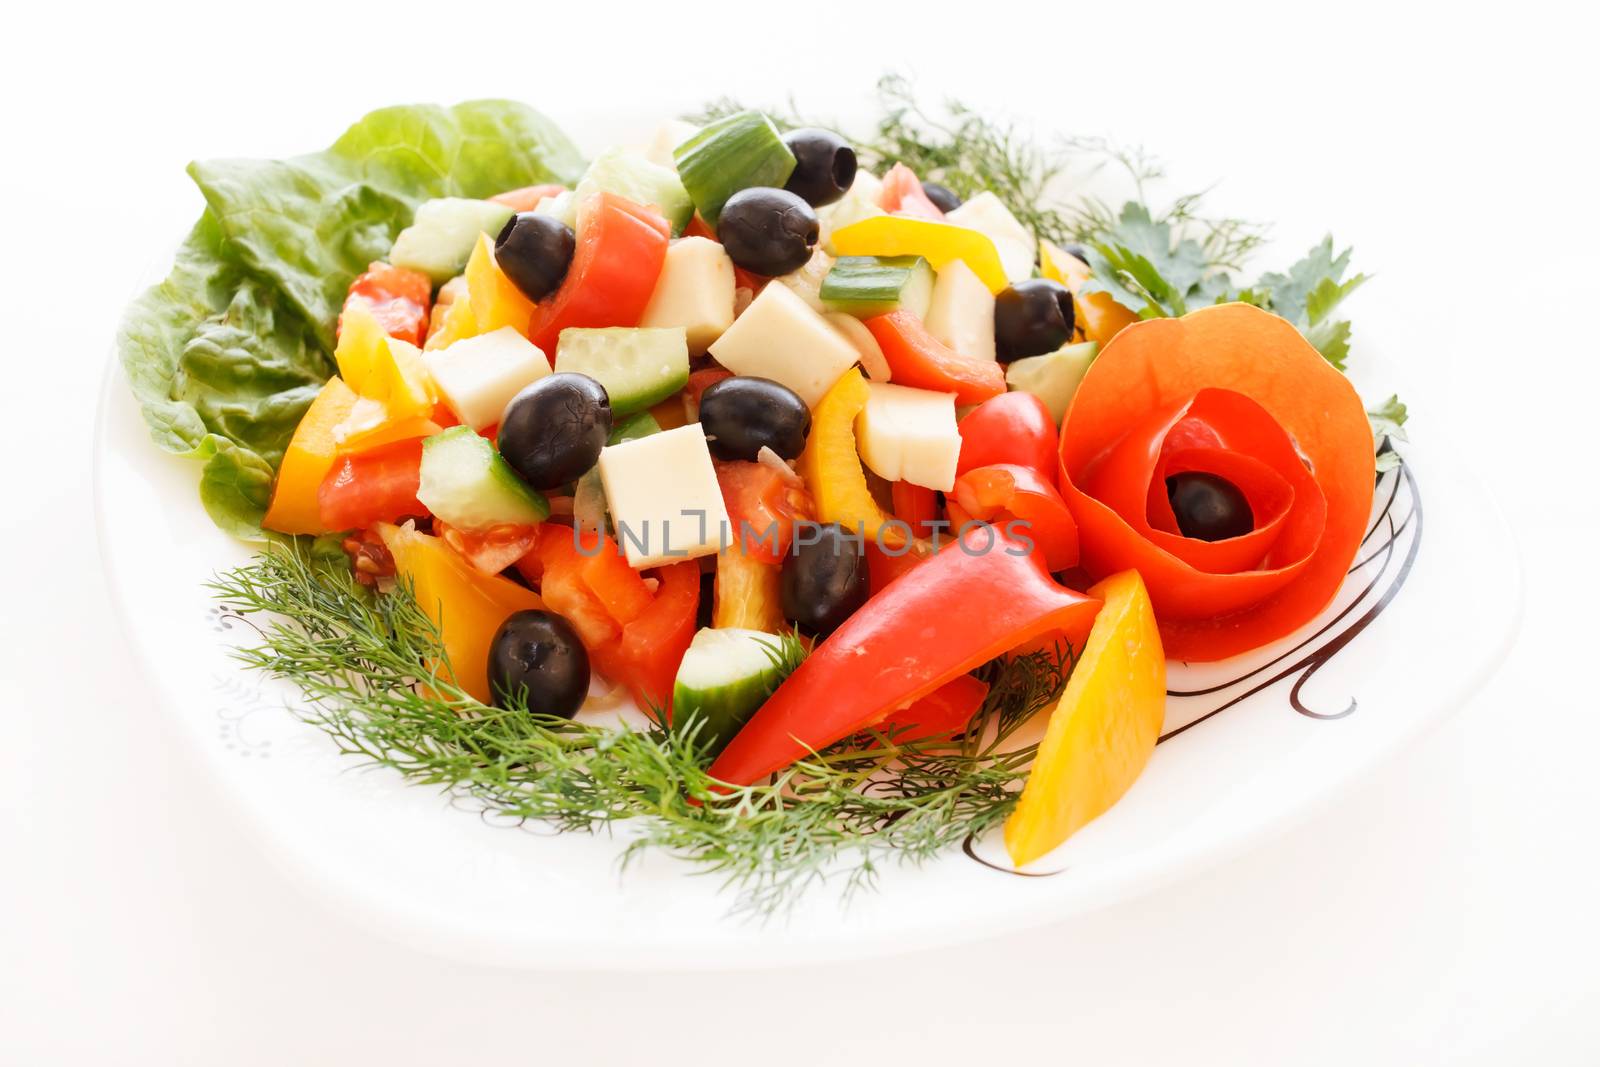 greek salad by shebeko